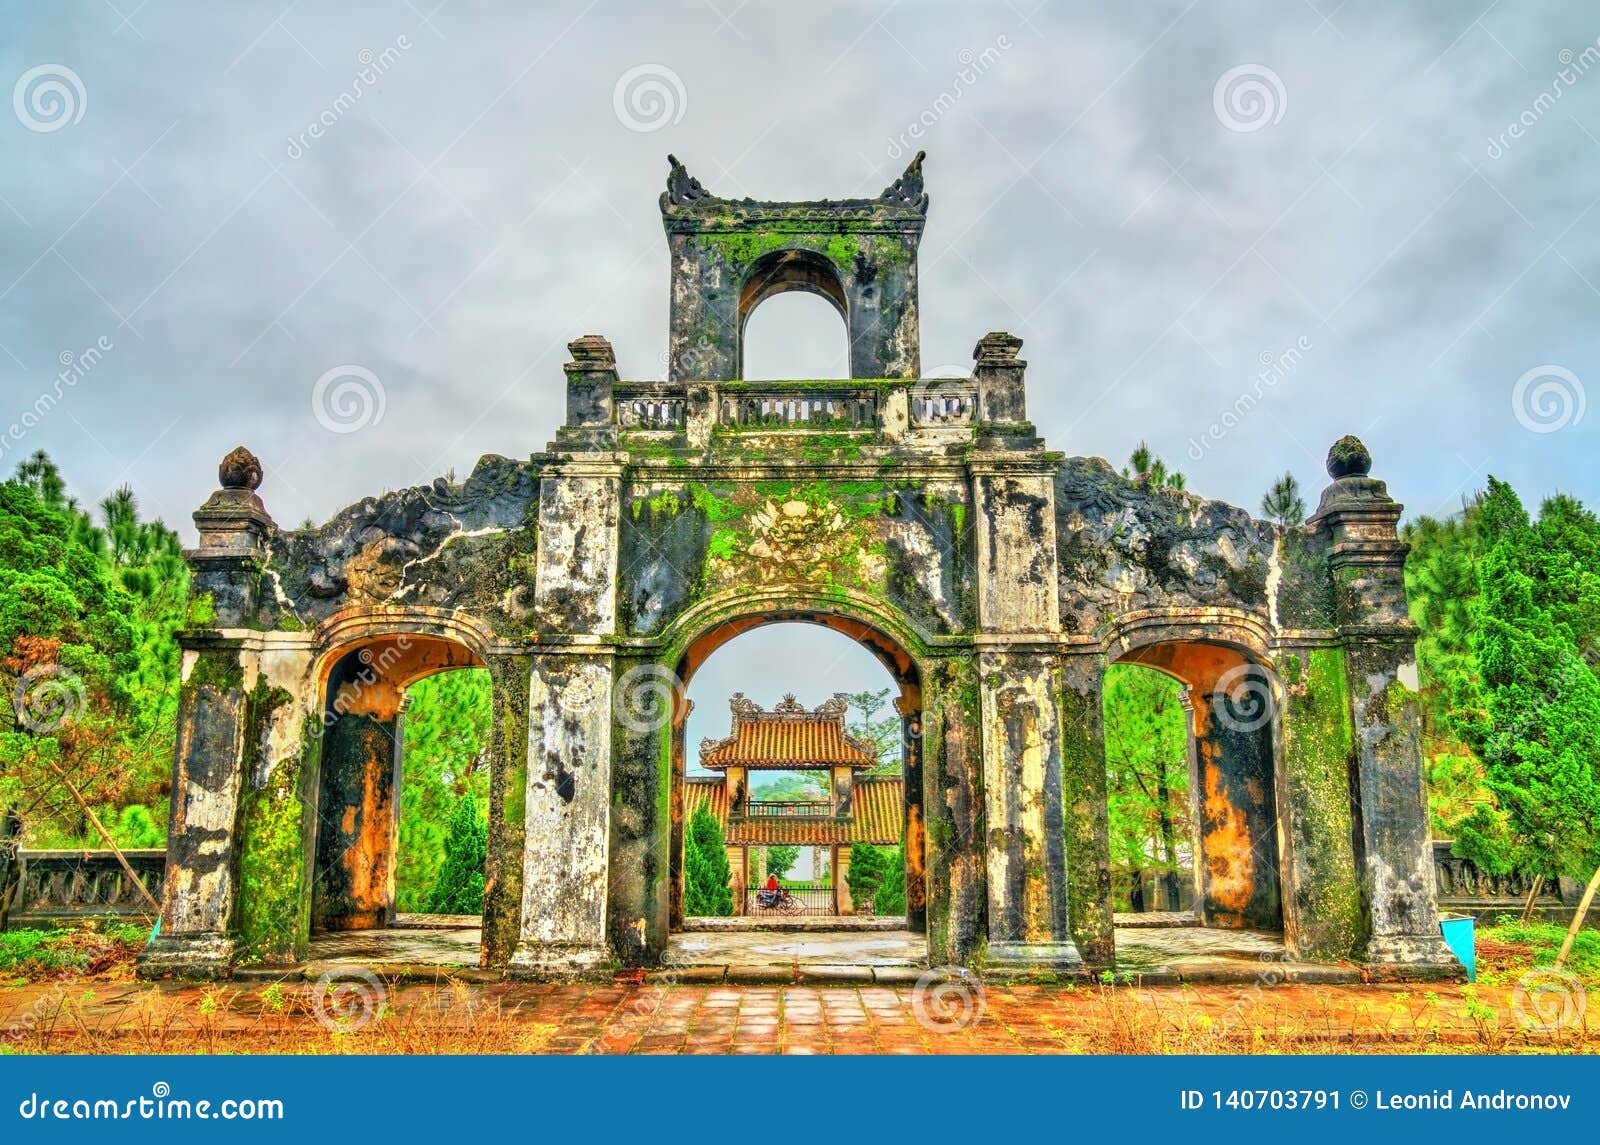 the temple of literature in hue, vietnam